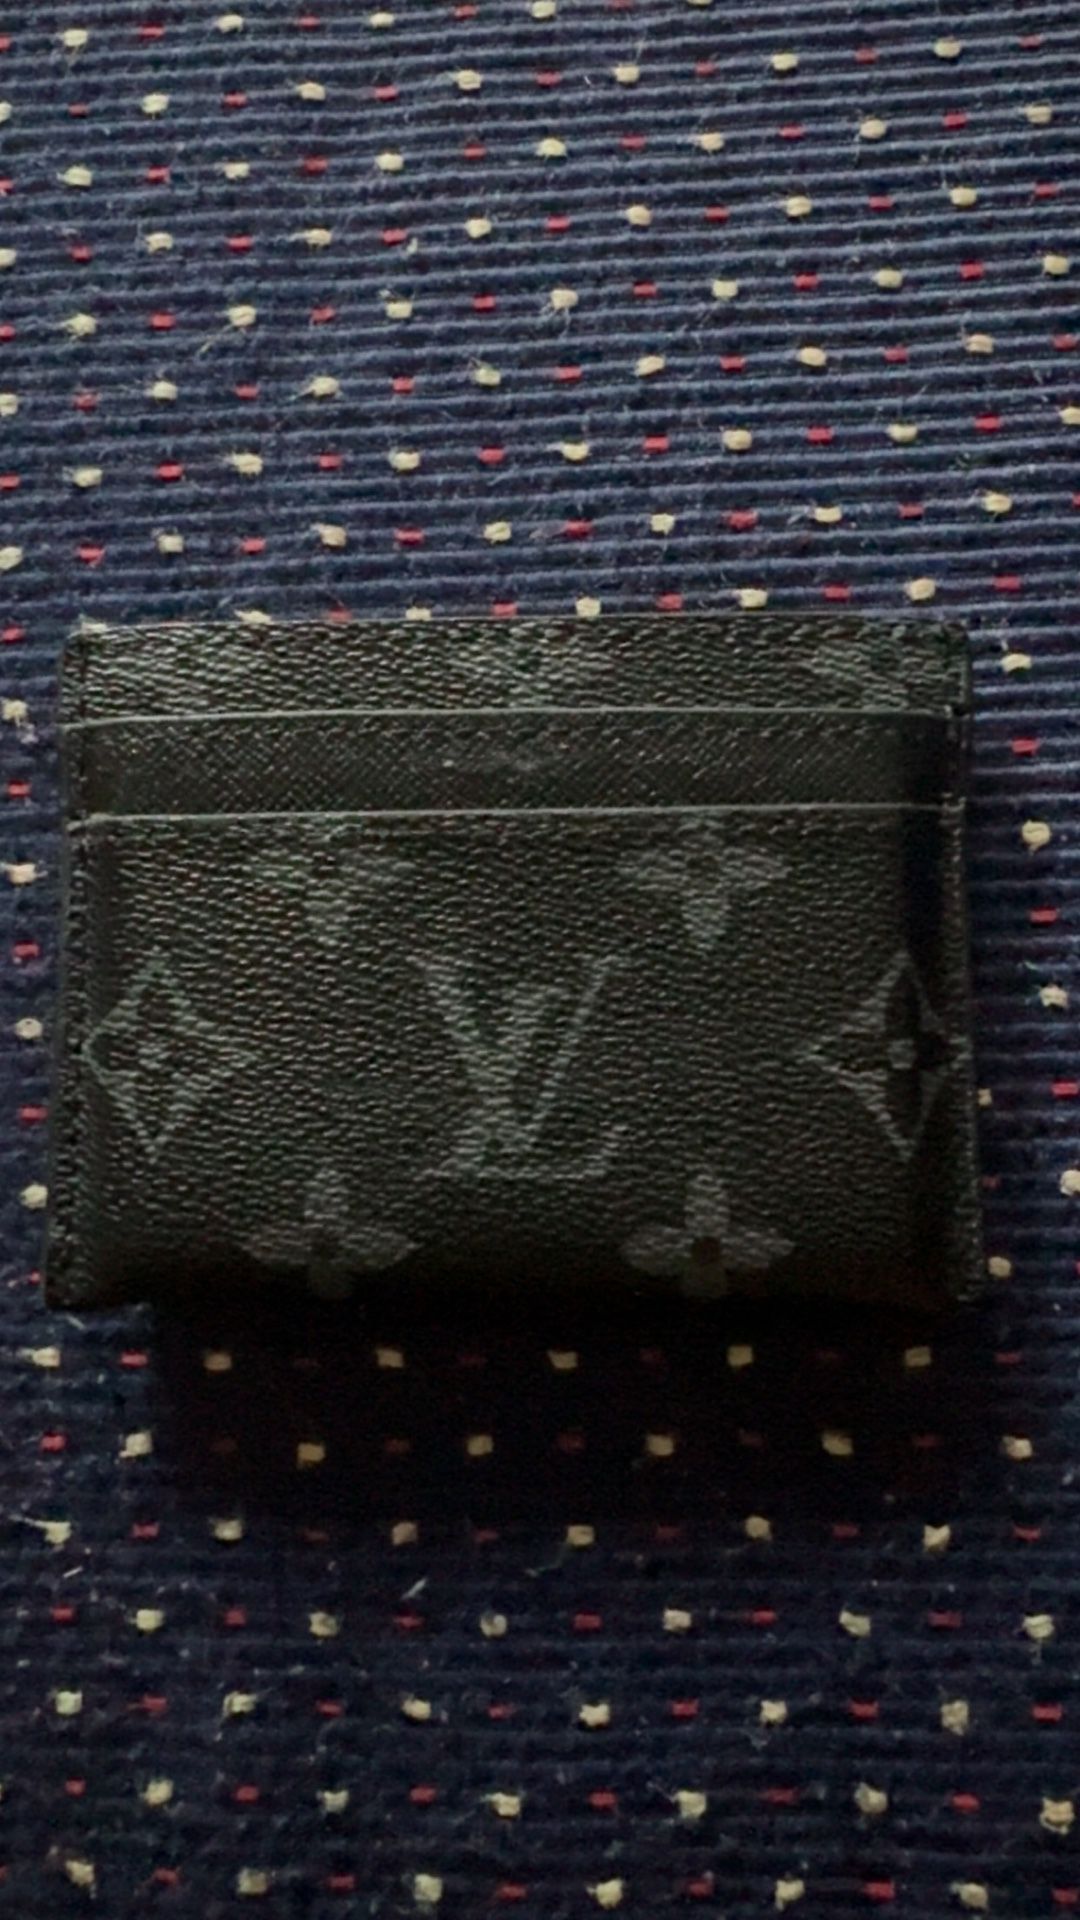 Louis Vuitton Card Holder 